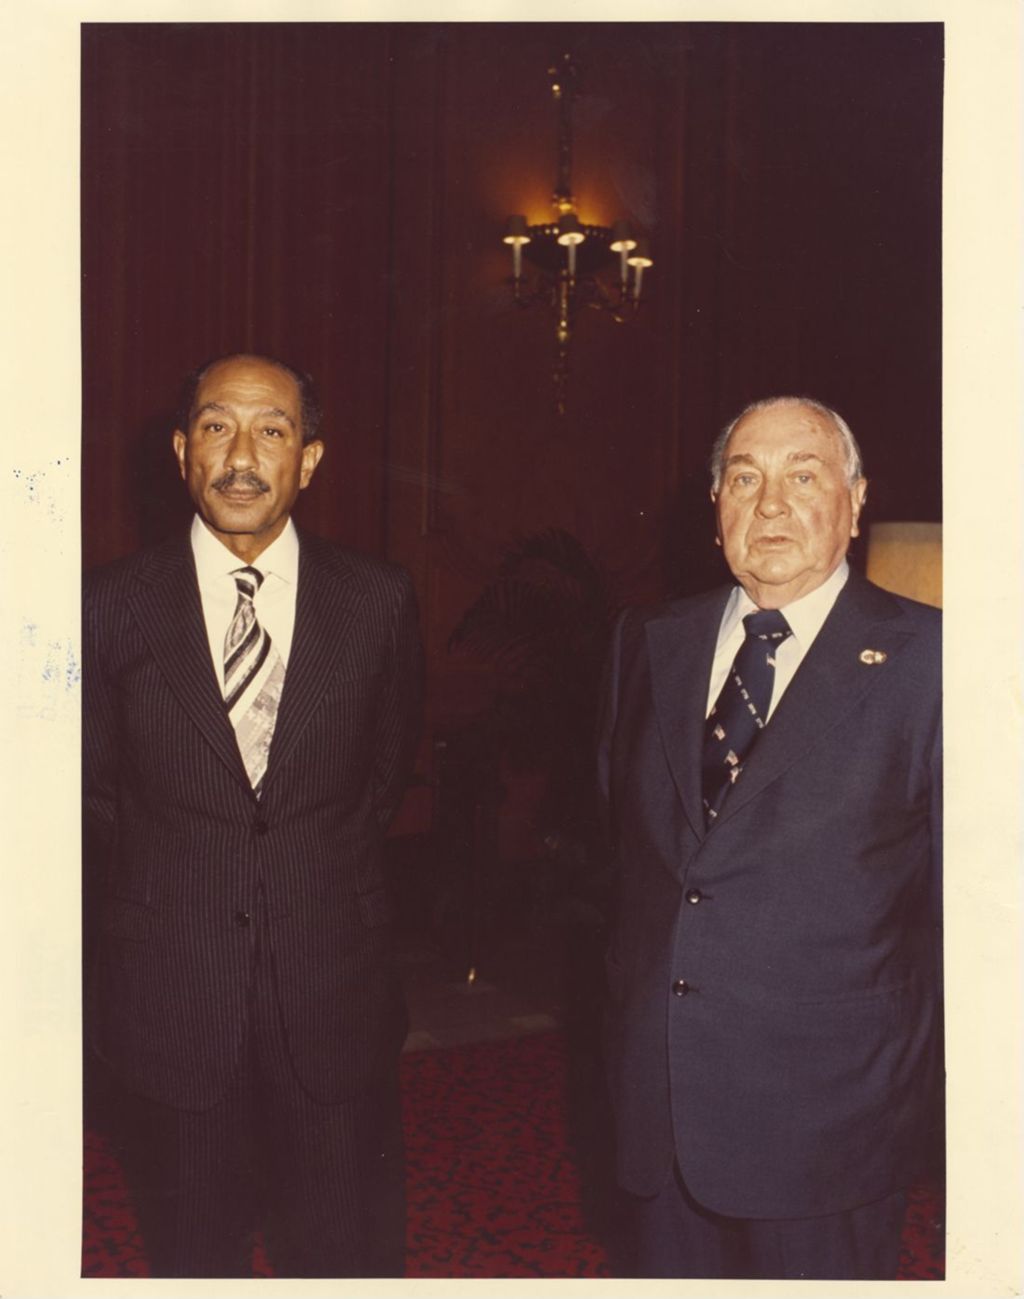 Miniature of Chicago visit of Egyptian President Anwar Sadat